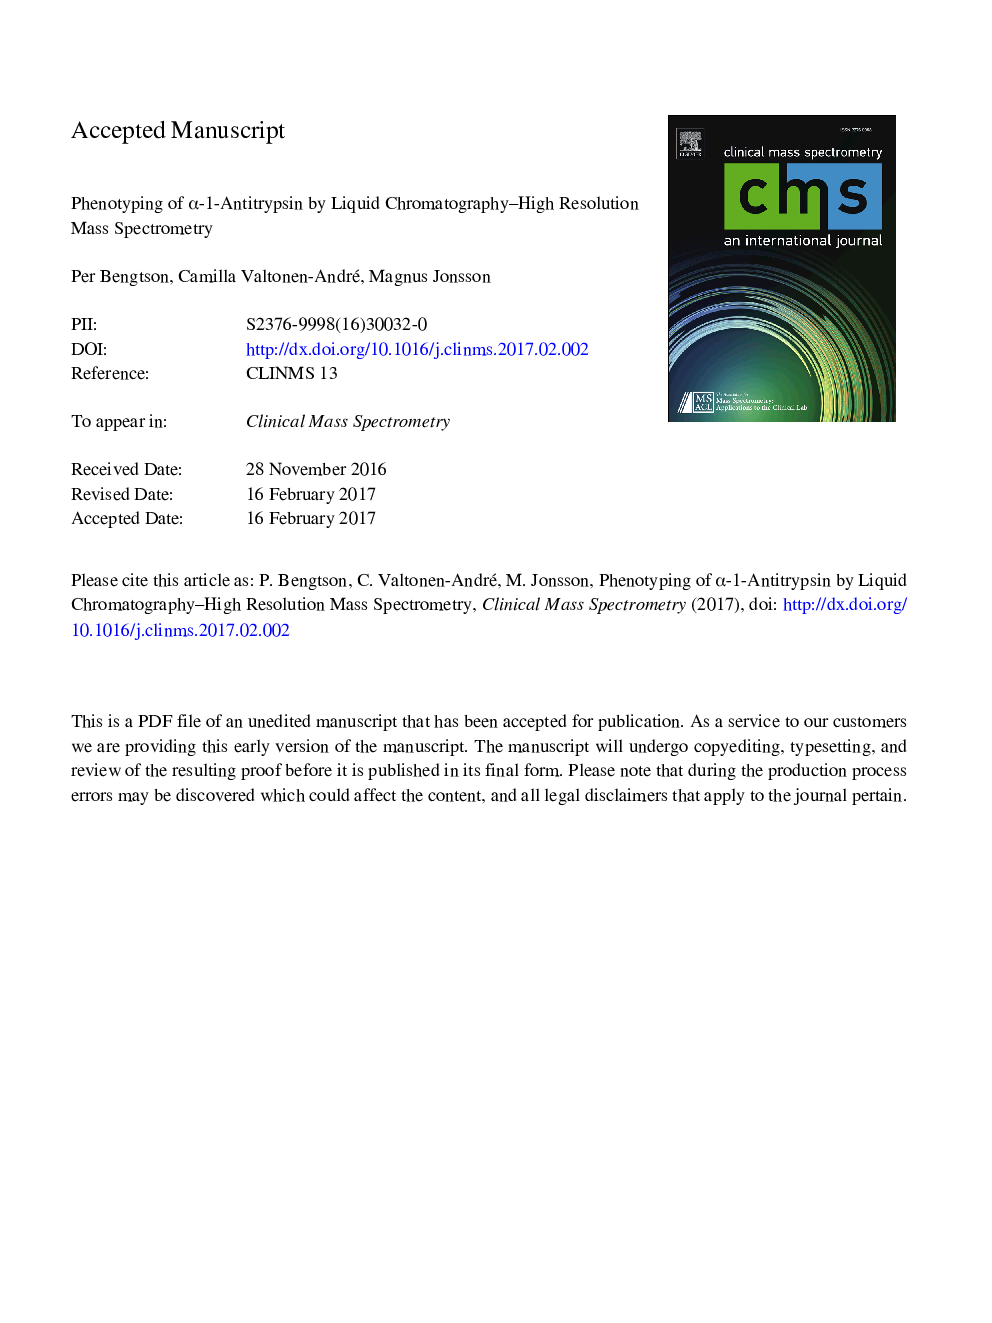 Phenotyping of Î±-1-Antitrypsin by liquid chromatography-high resolution mass spectrometry